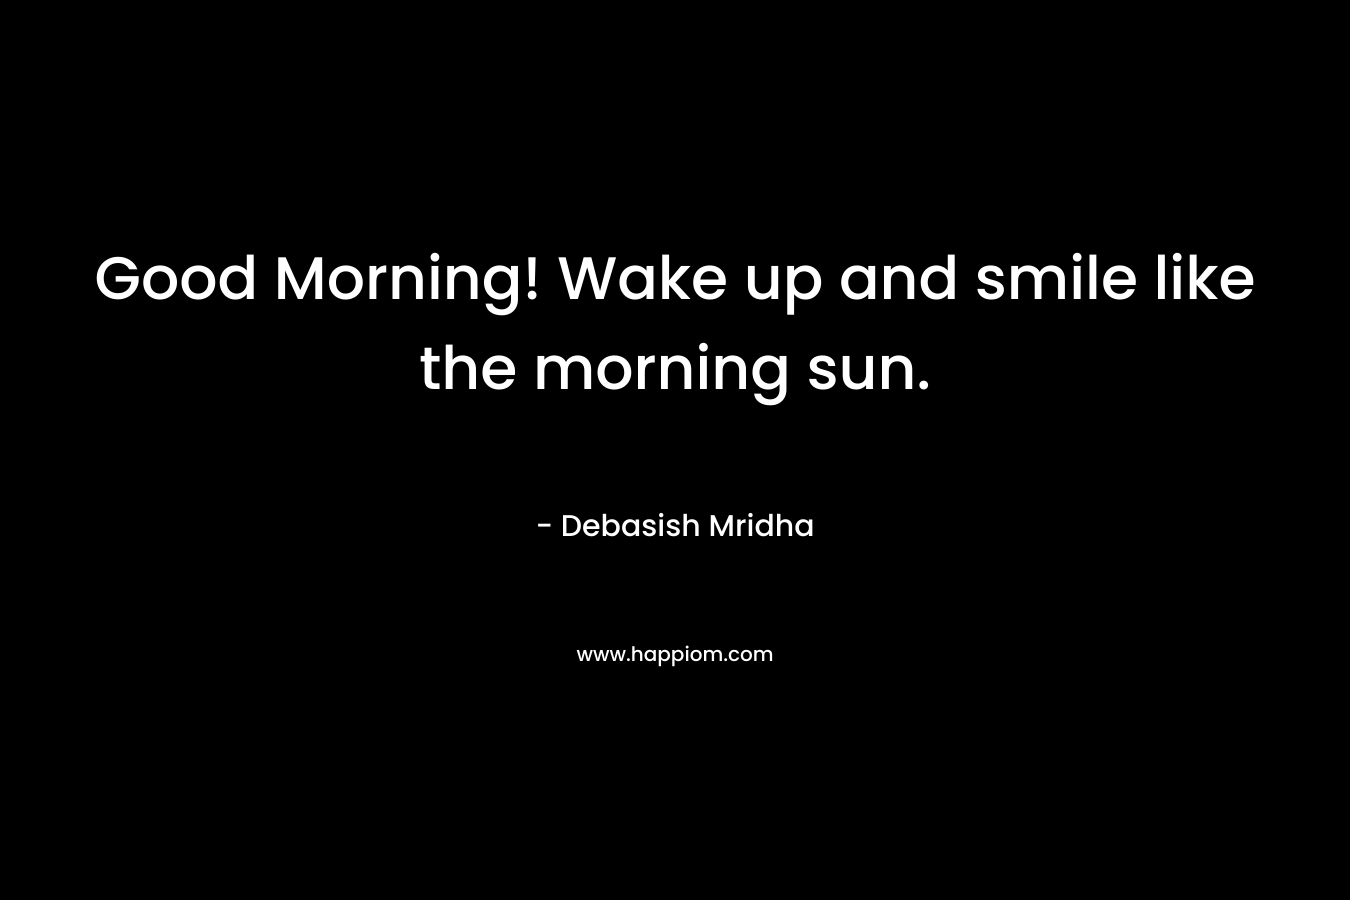 Good Morning! Wake up and smile like the morning sun.